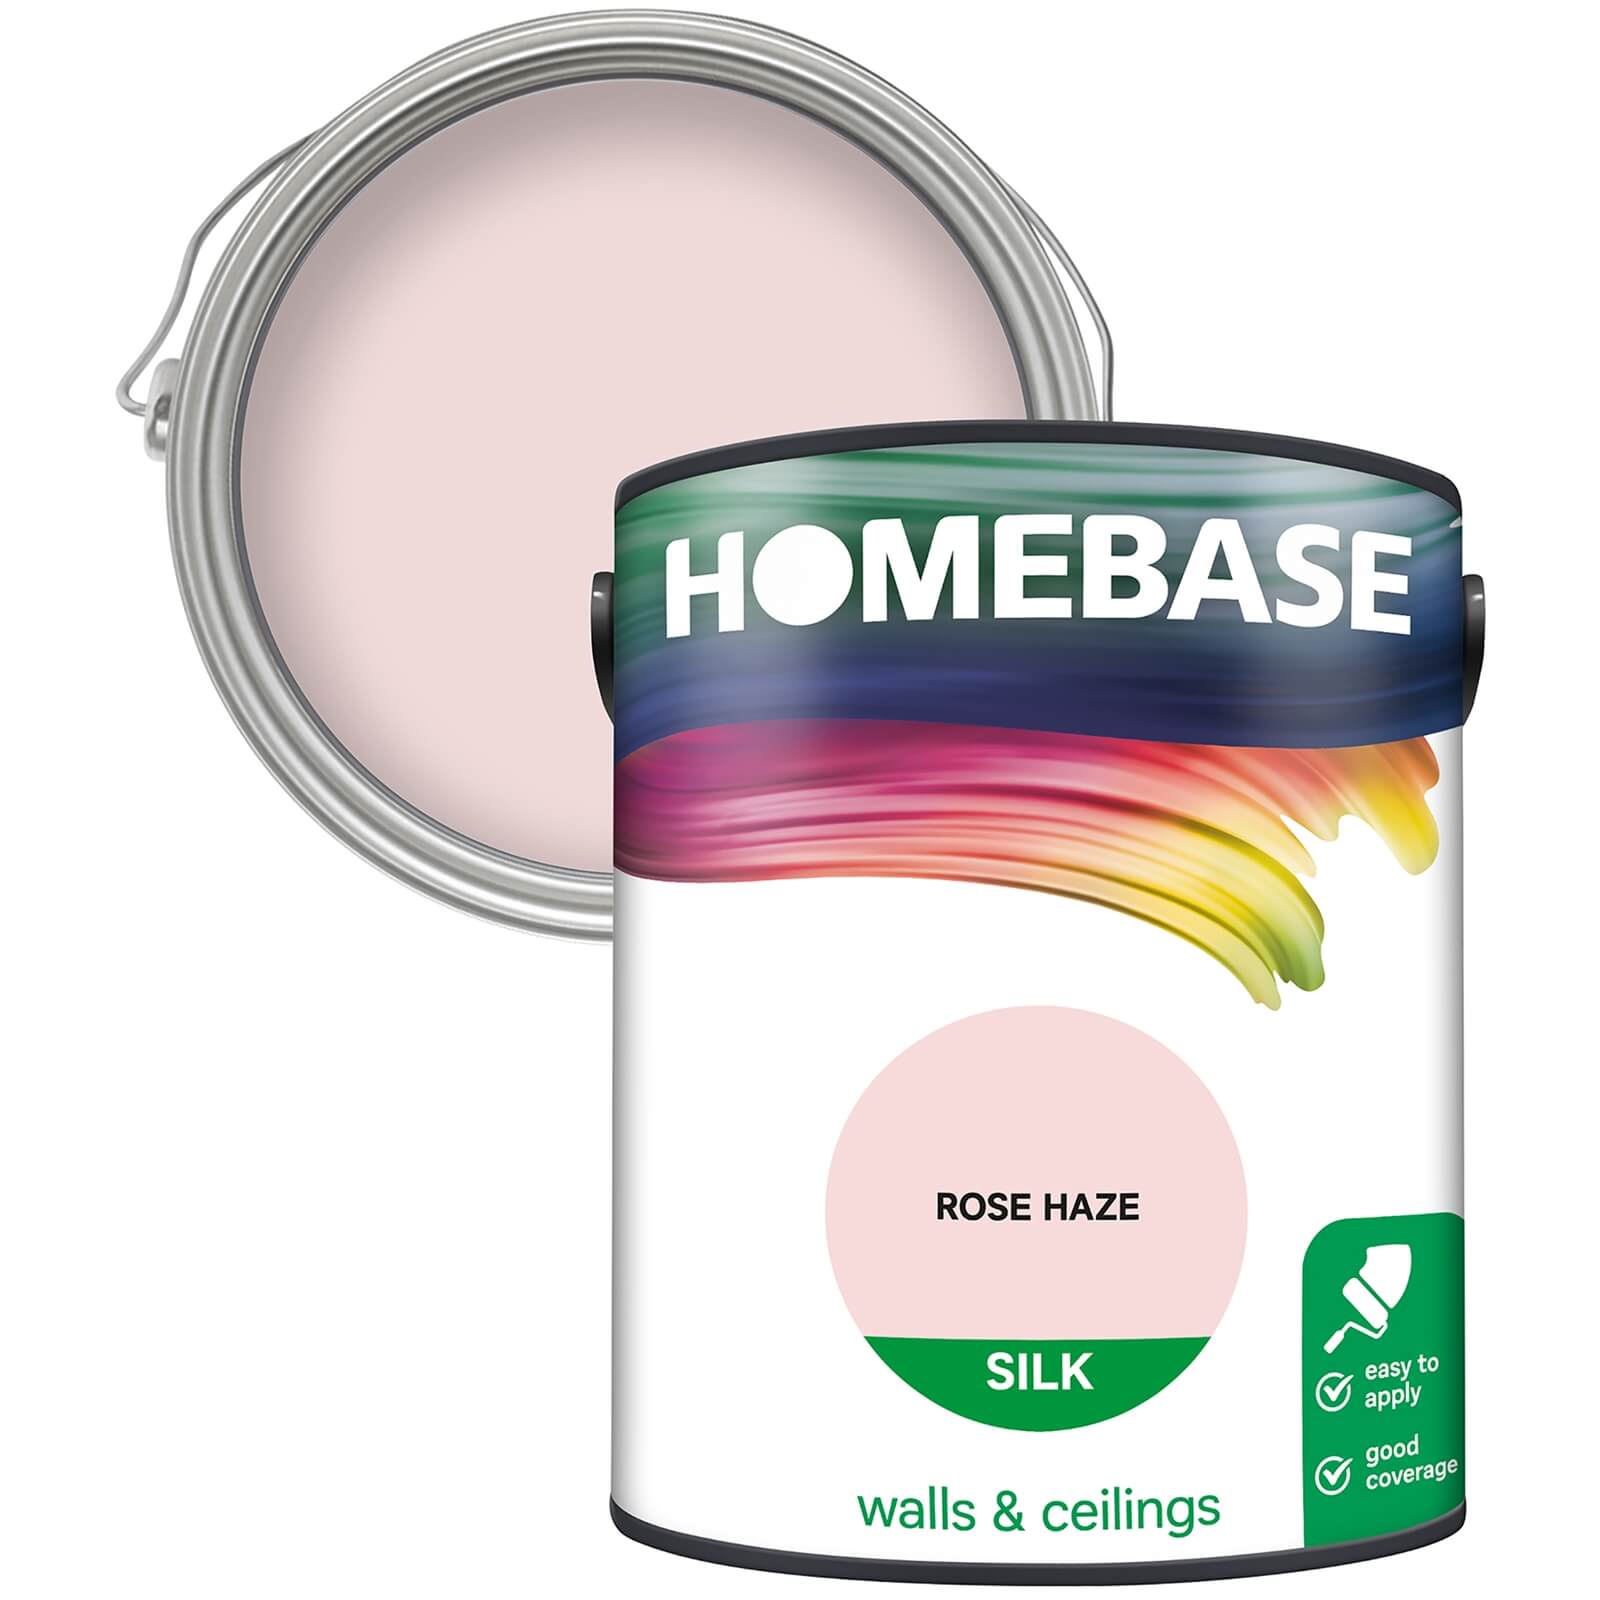 Photo of Homebase Silk Paint - Rose Haze 5l